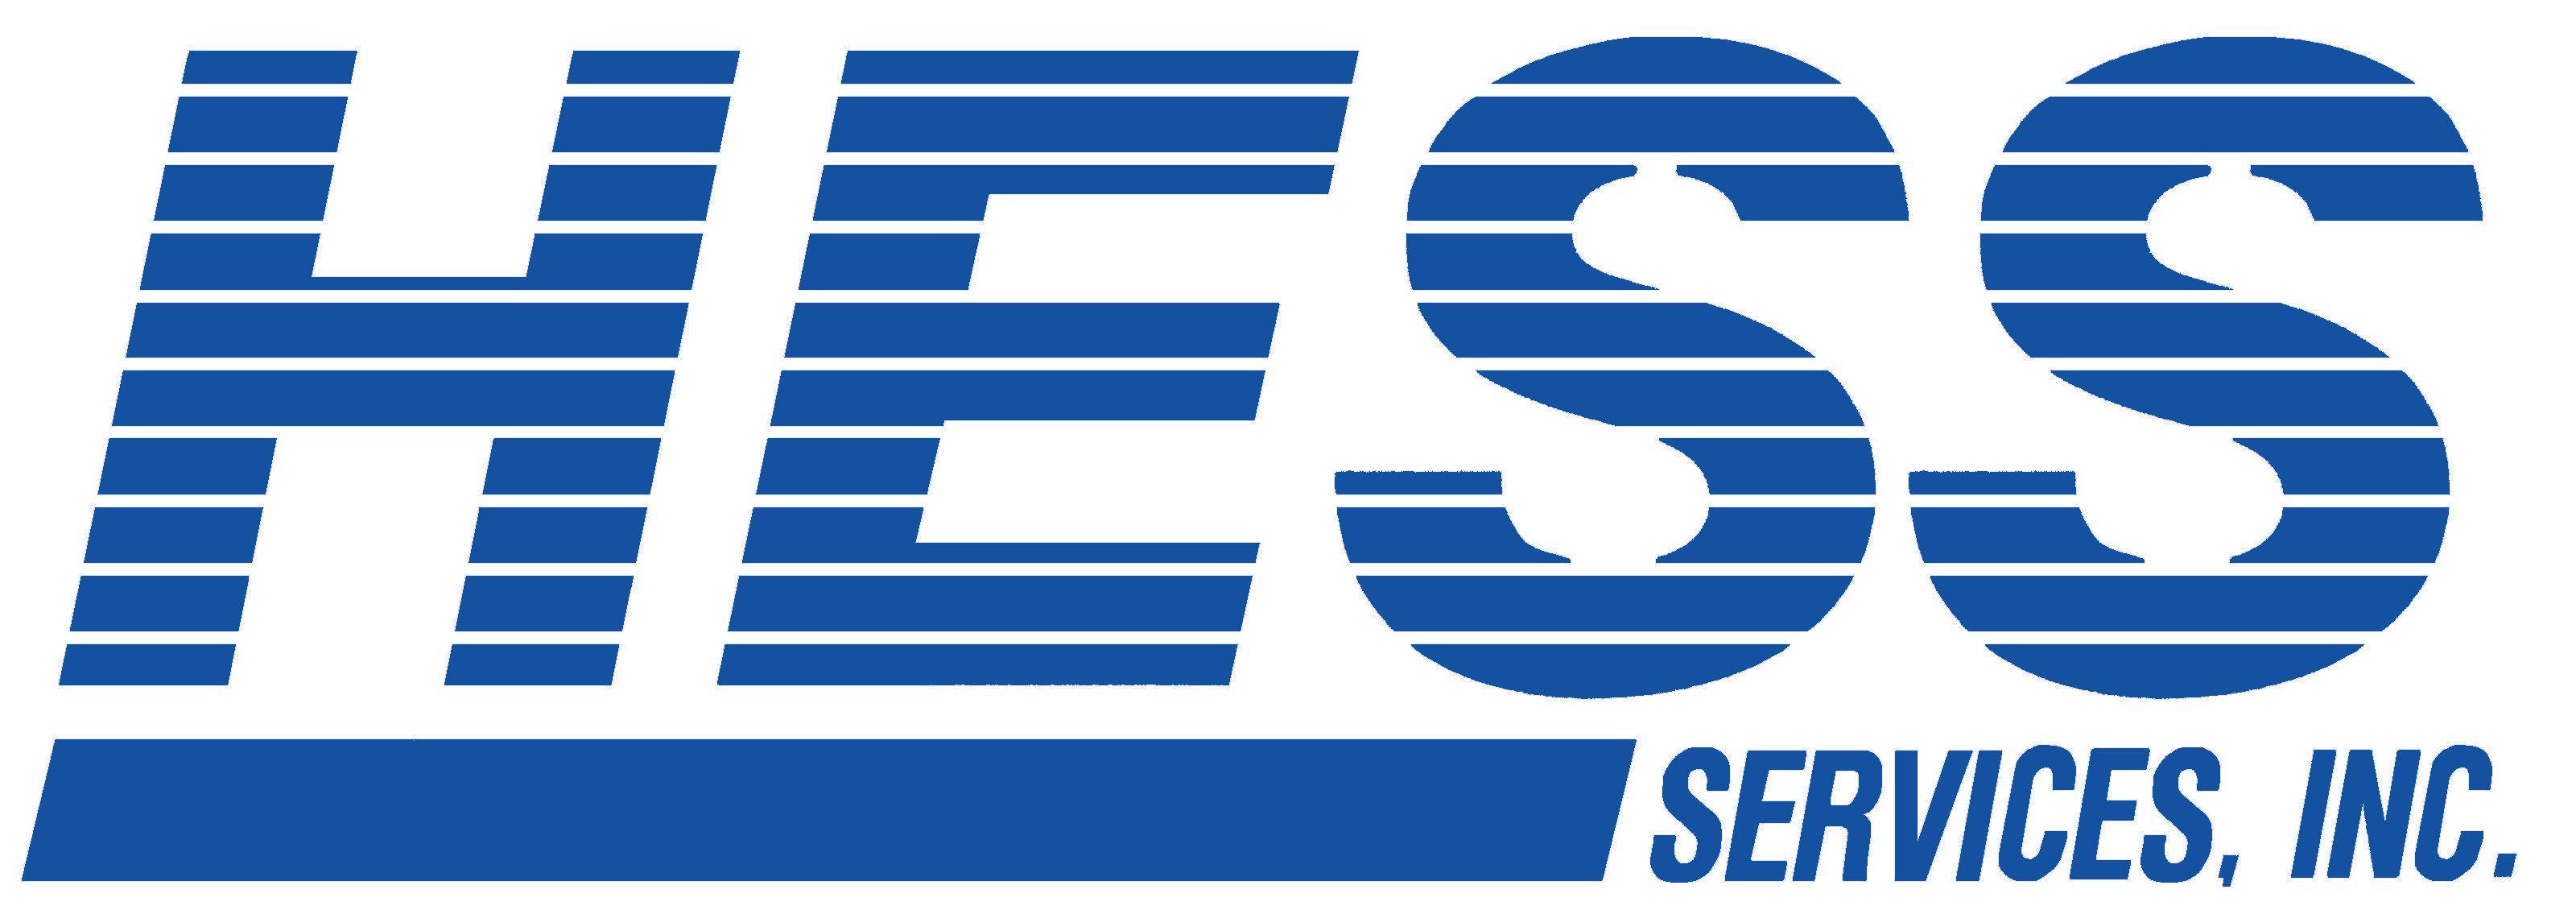 Hess Logo - Hess Services, Inc